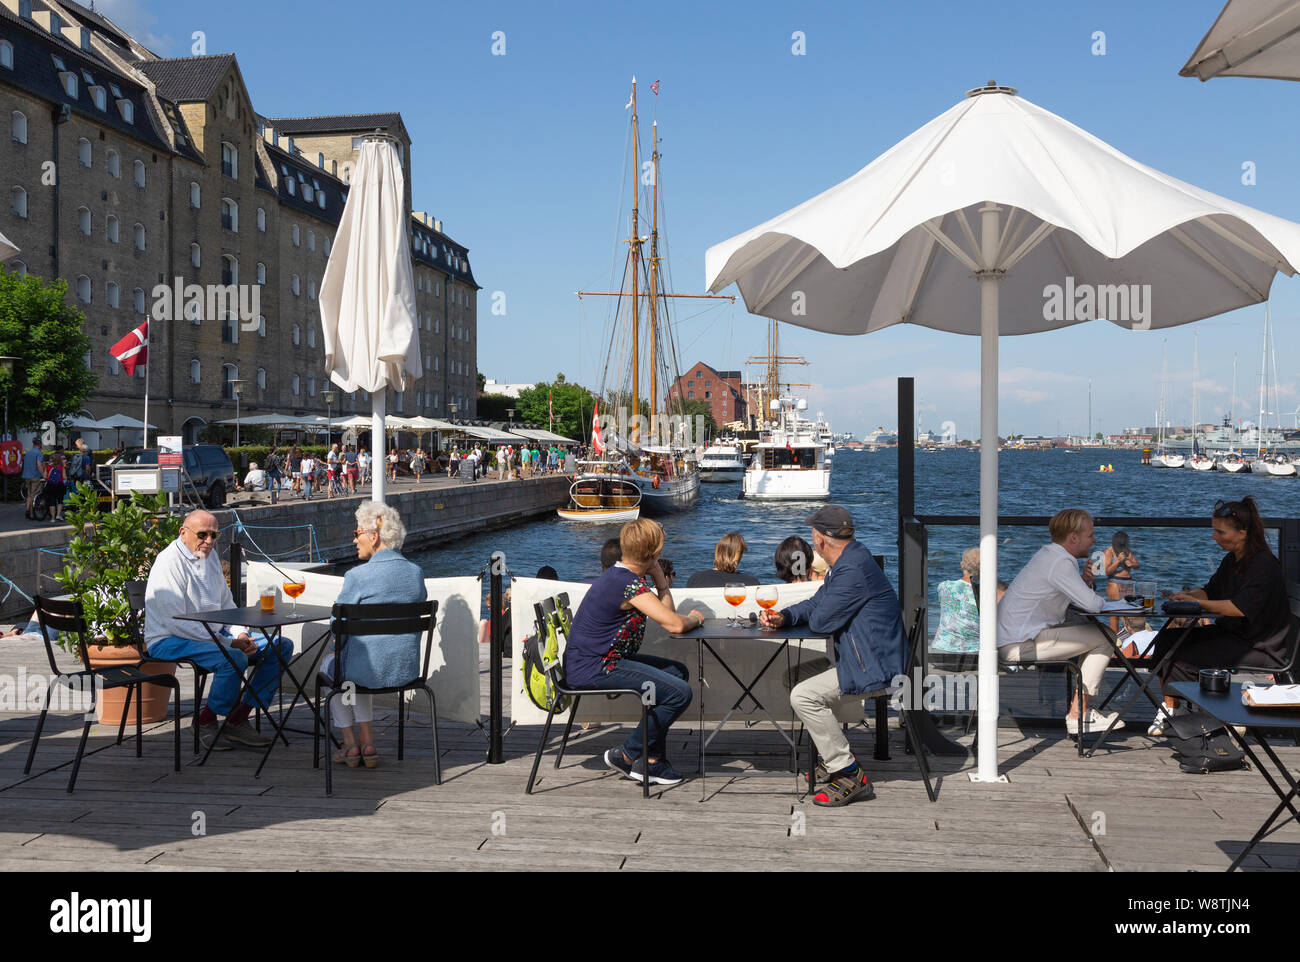 Copenhagen cafe; people drinking outside in summer sunshine, larsens Plads, Copenhagen, Denmark Scandinavia Europe Stock Photo